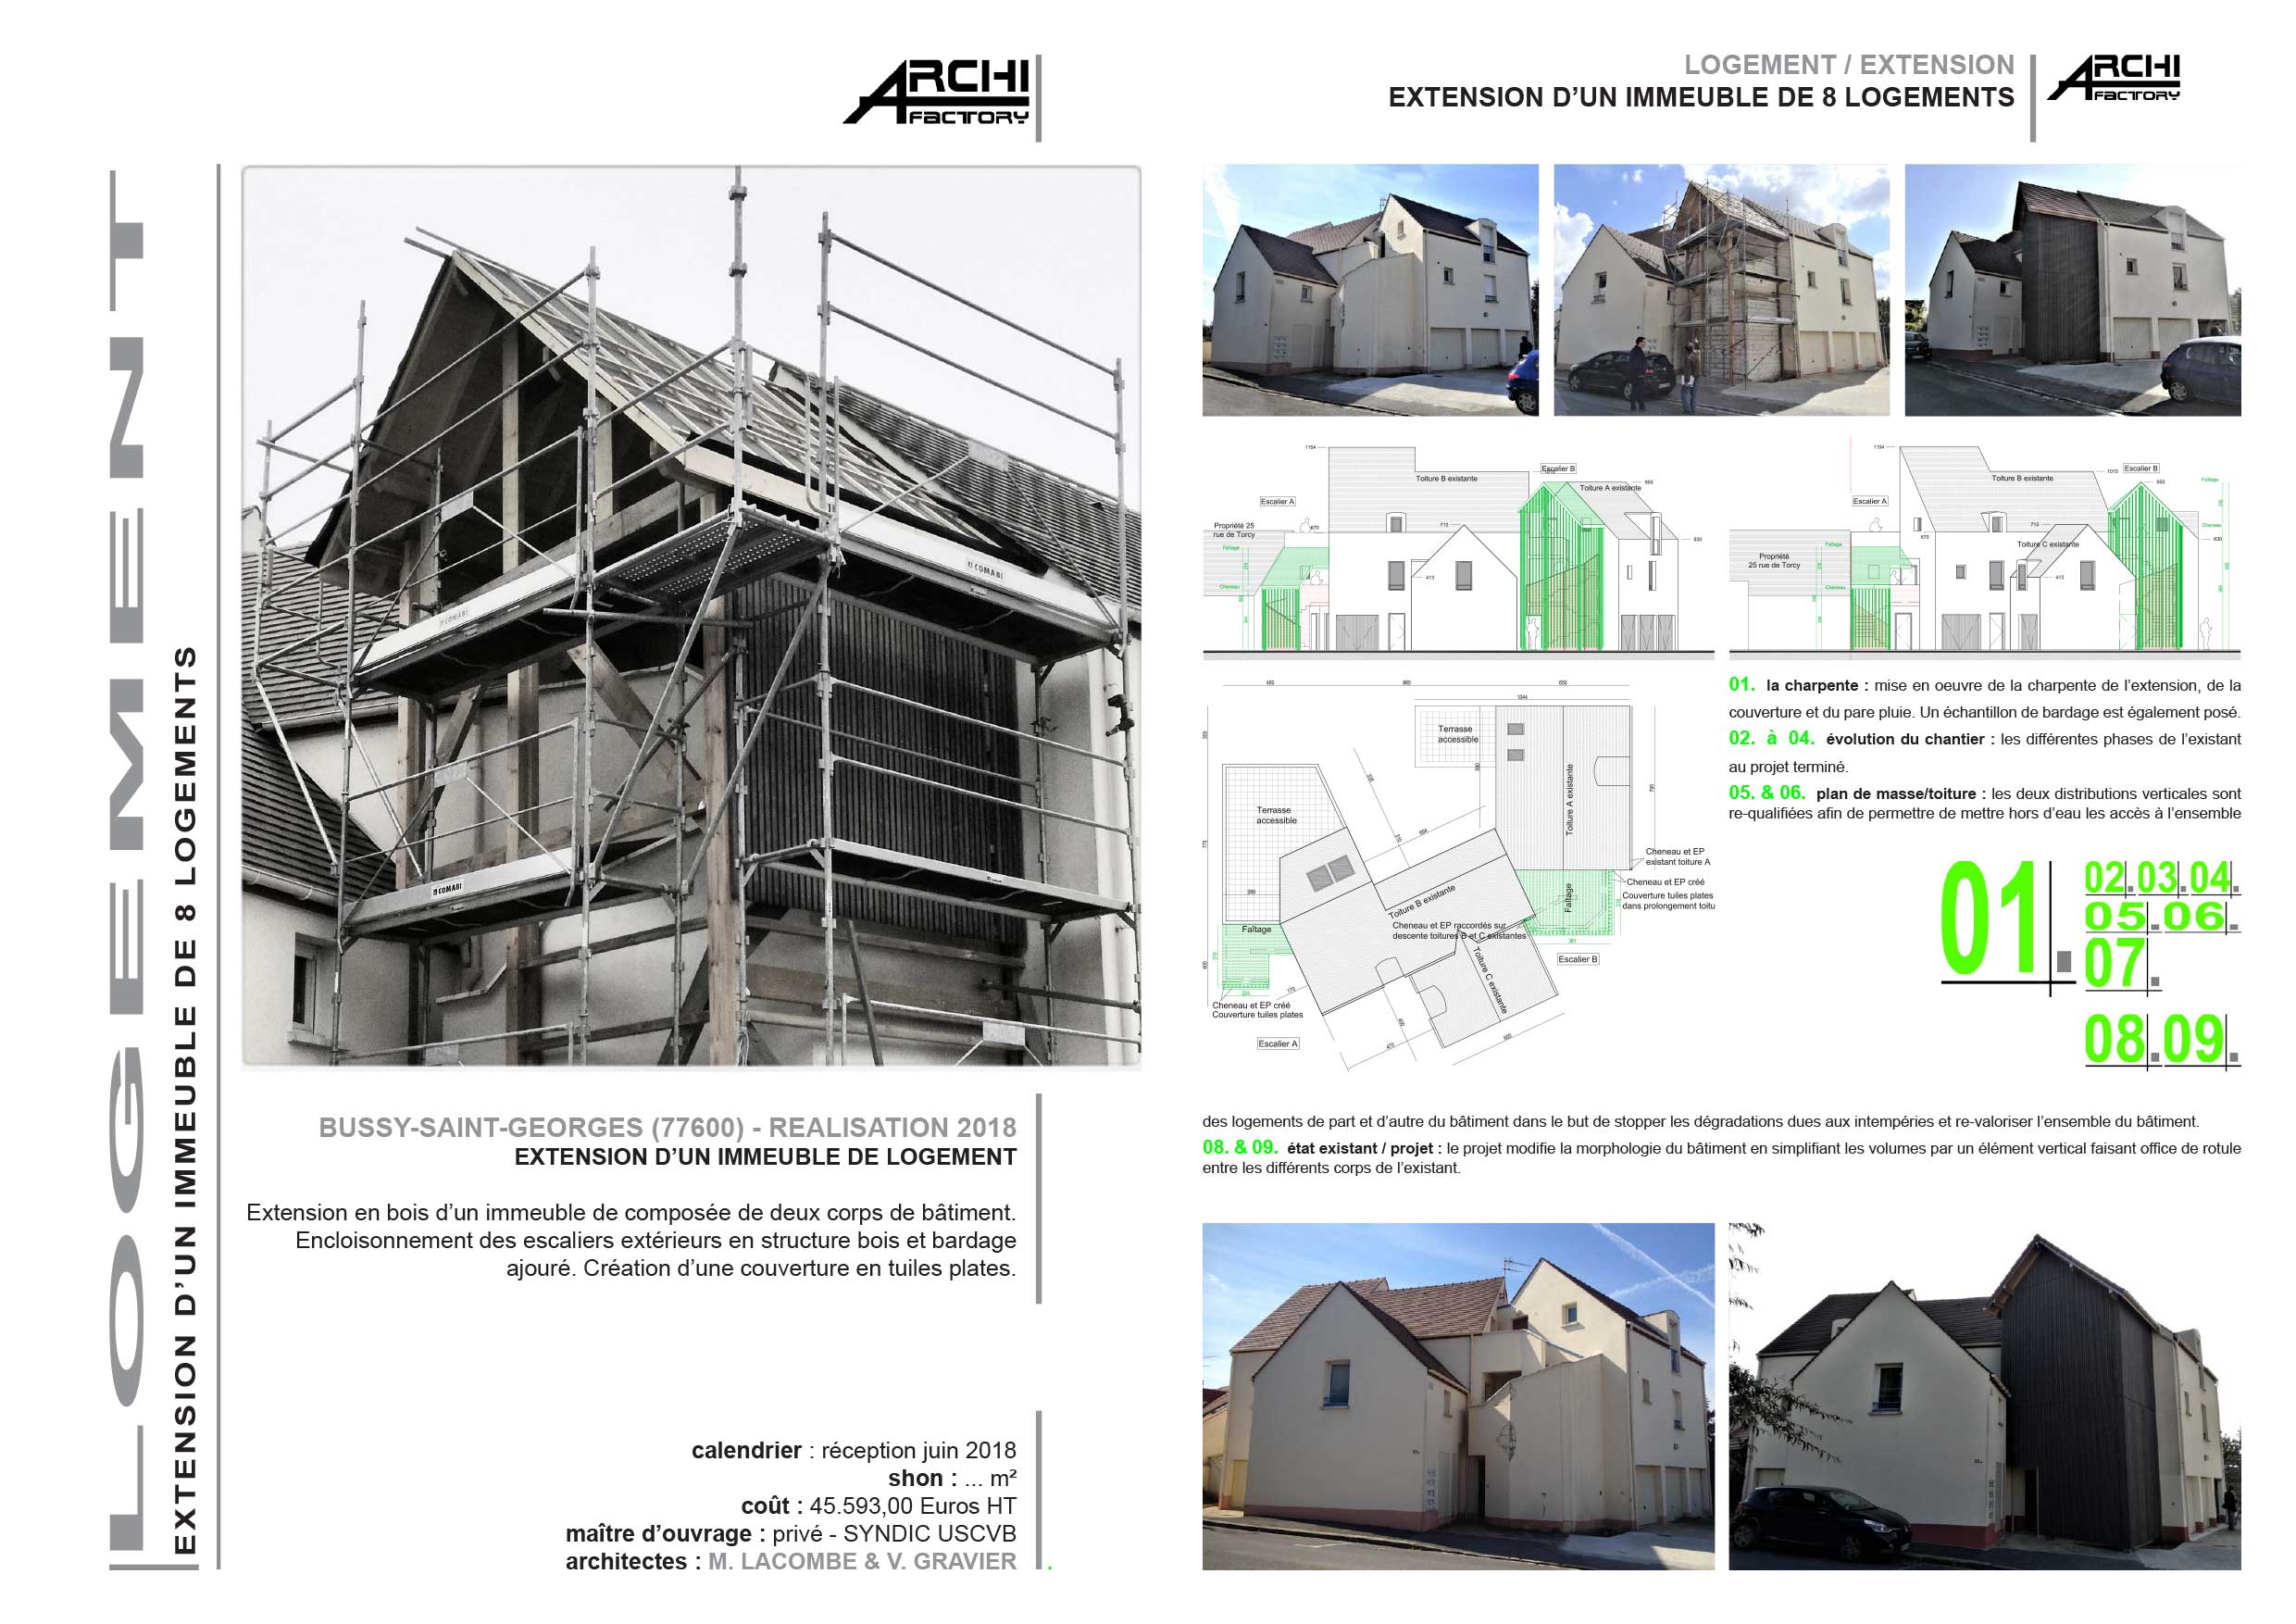 archifactory architectes - marc lacombe - projet bussy